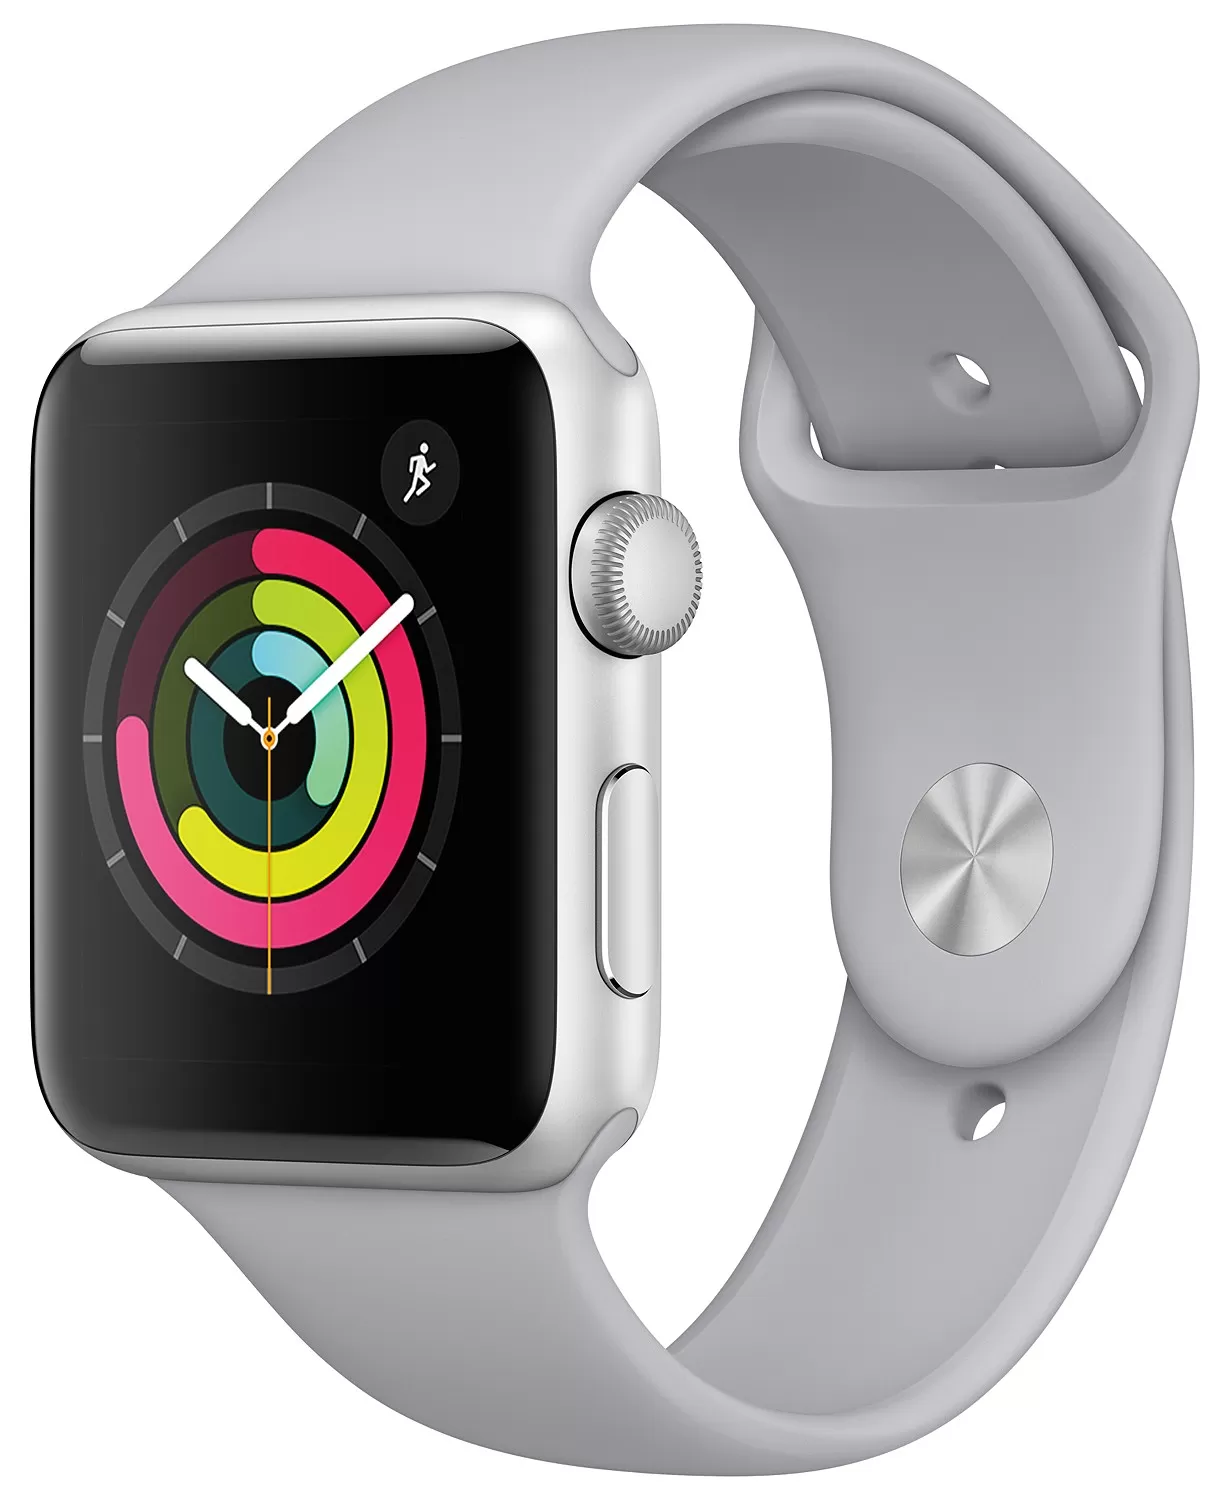 Apple Watch Series 3 on sale